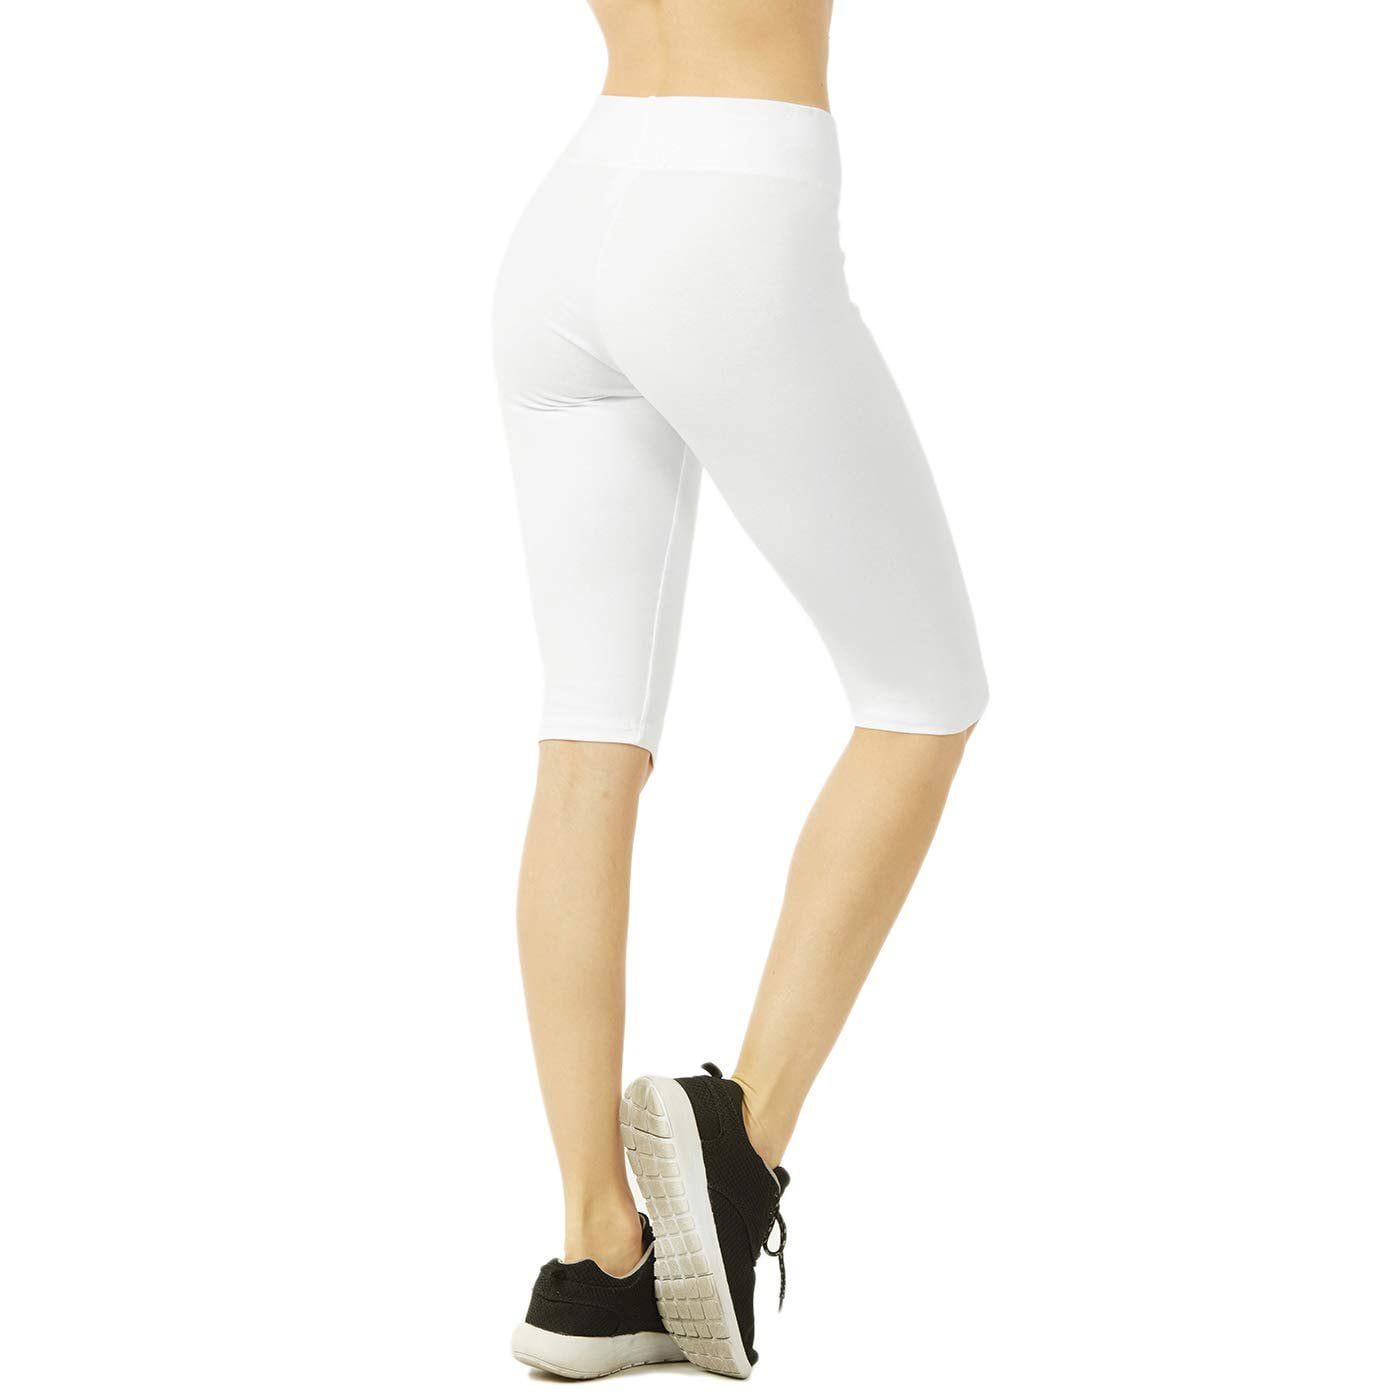 DailyWear Womens Solid Knee Length Short Yoga Cotton Leggings Black, Large  